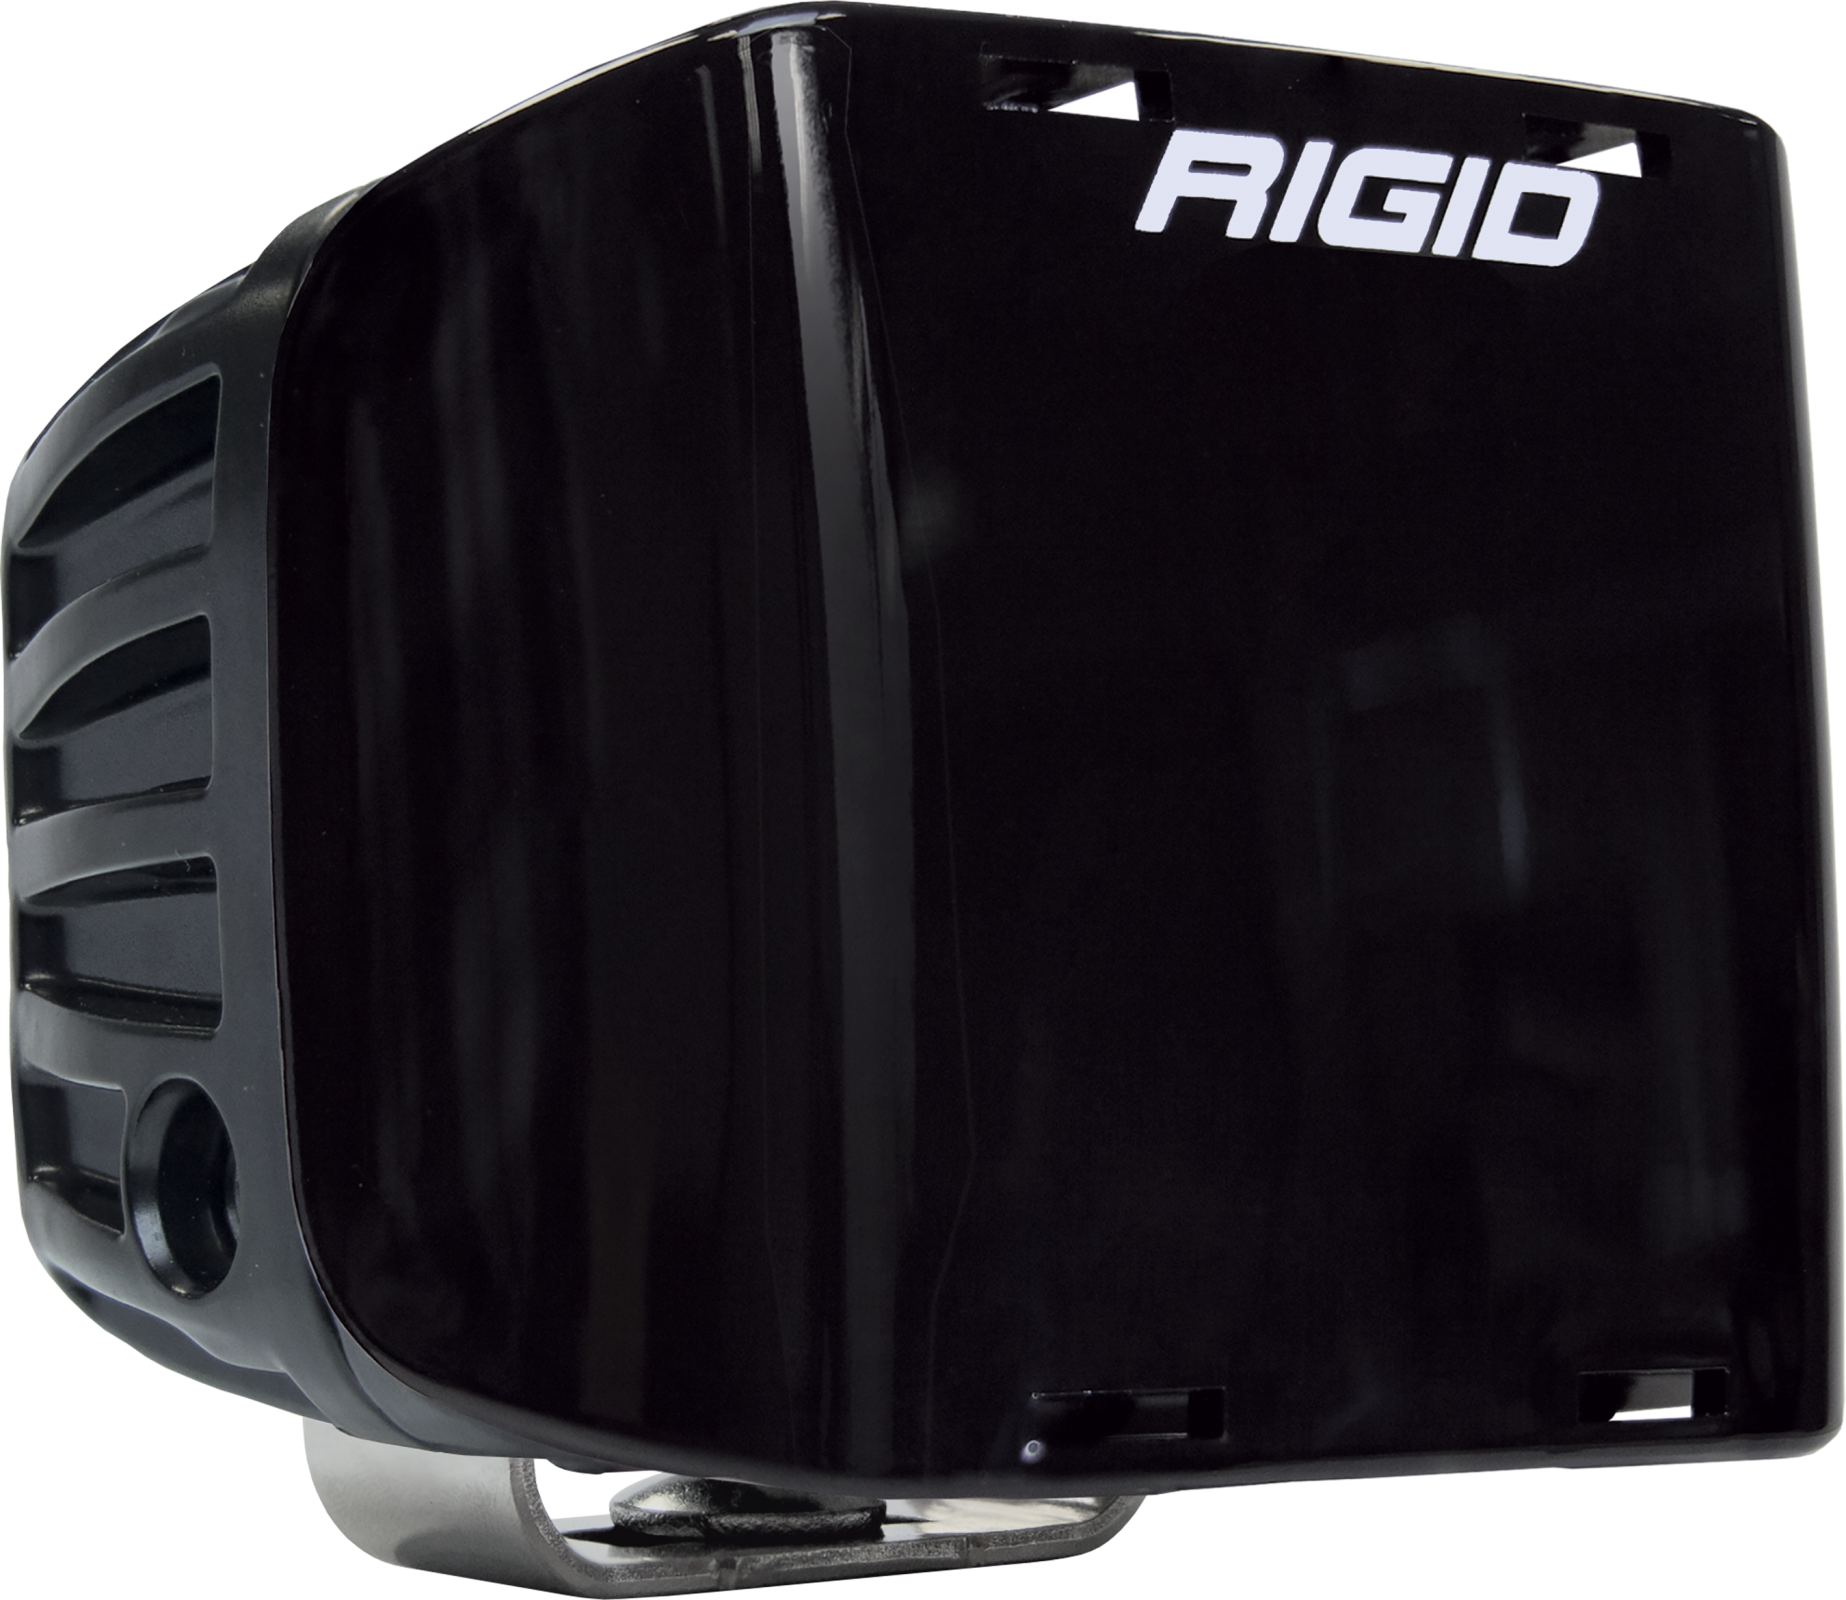 Rigid Industries Light Cover Black D-SS Pro